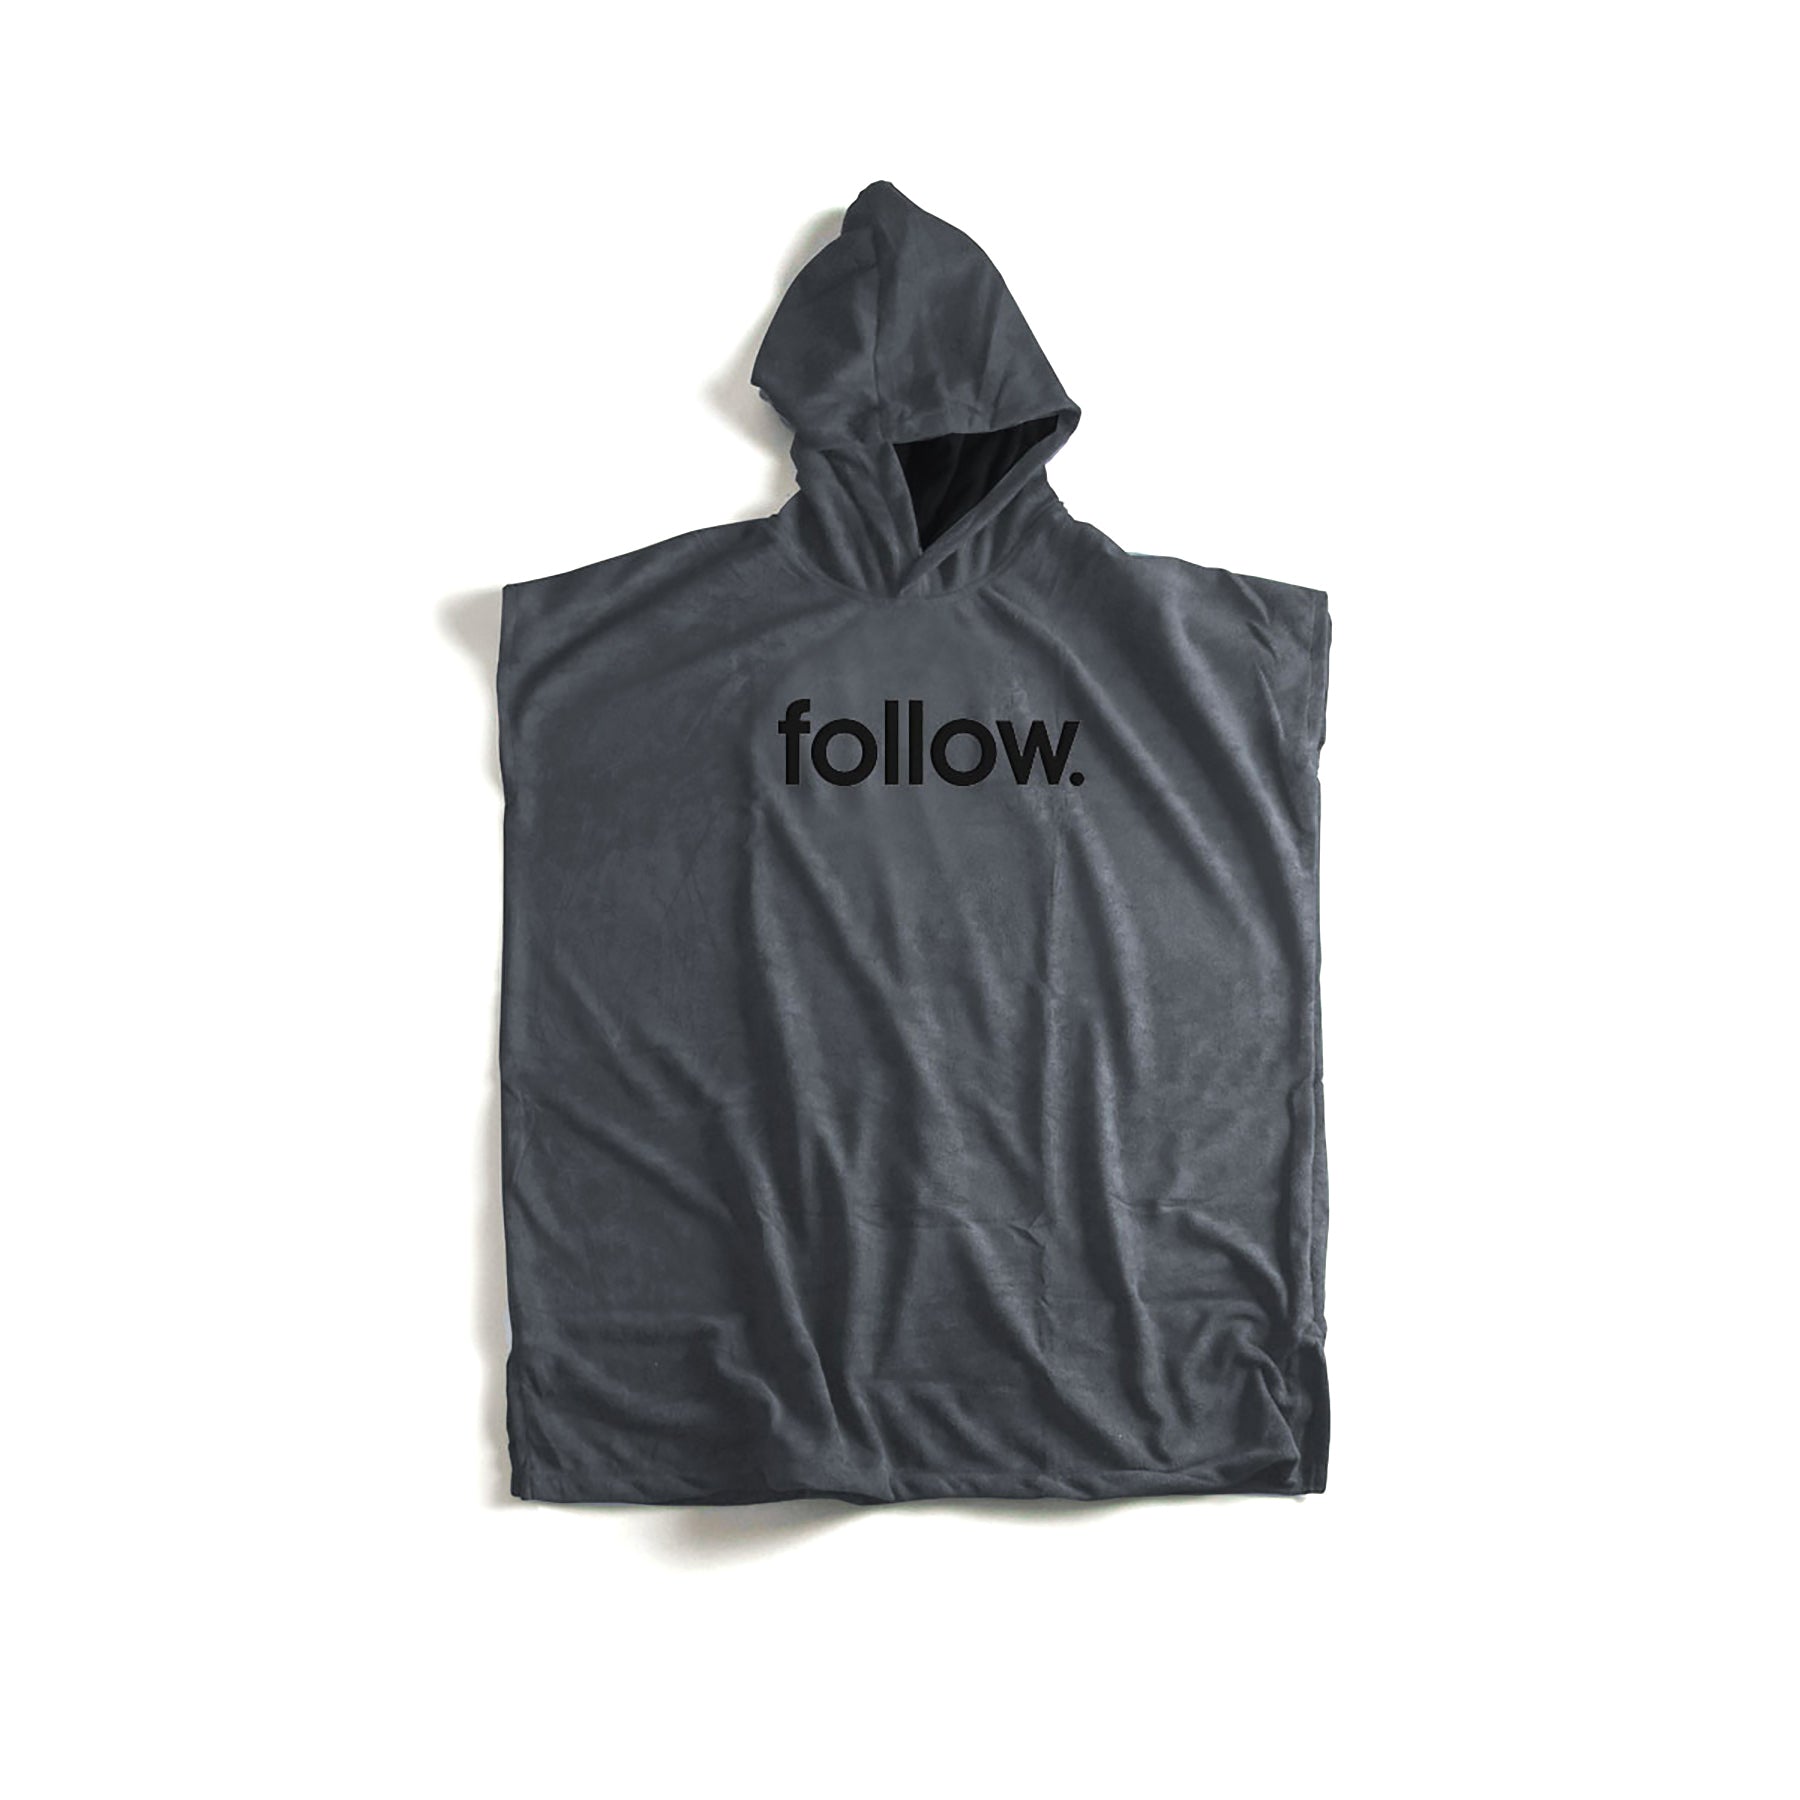 FOLLOW TOWELIE (hooded Towel) -FollowF12709-Stone-LARGE